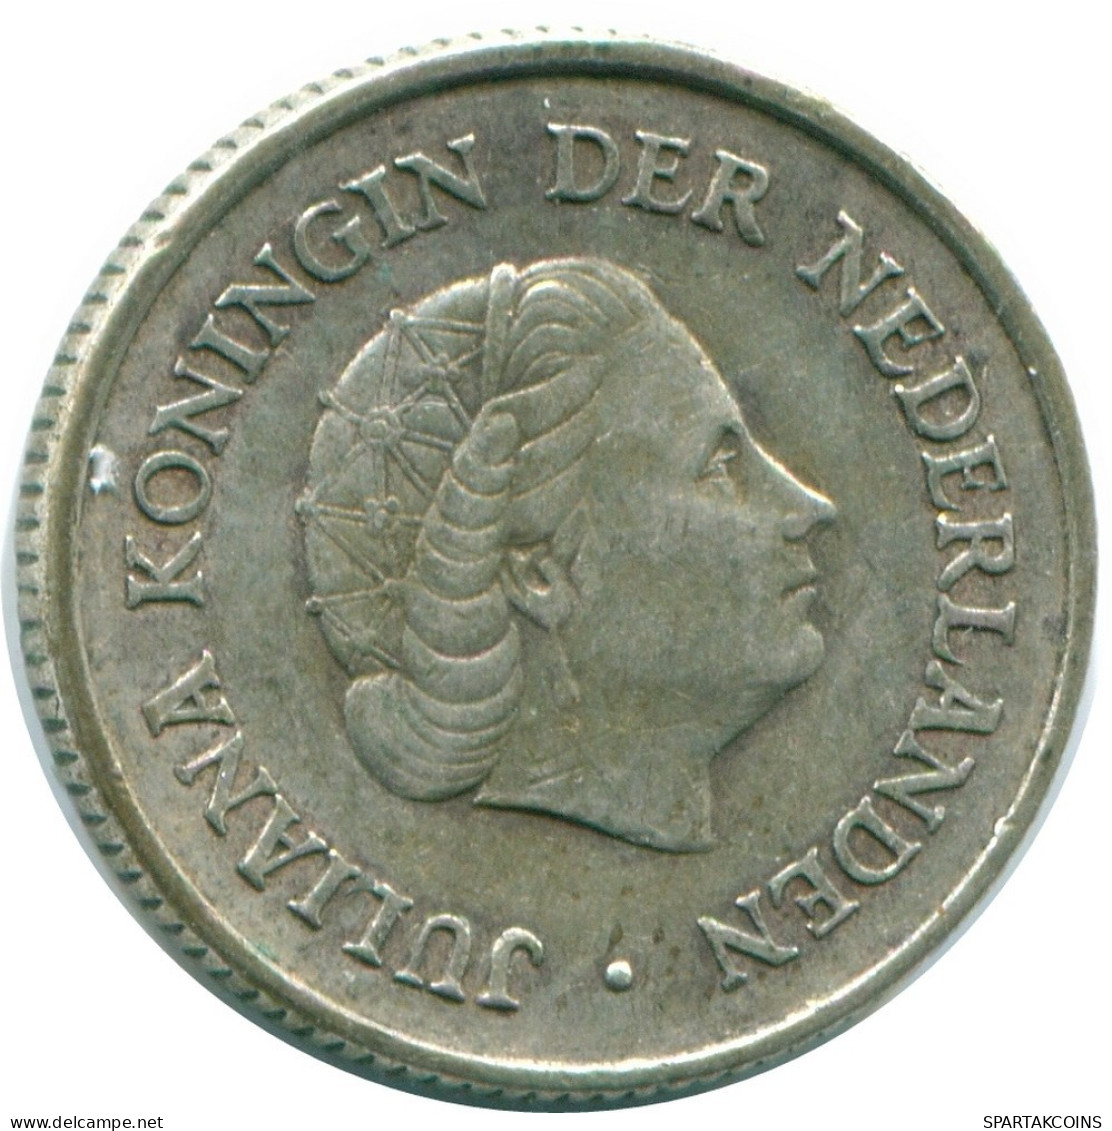 1/4 GULDEN 1965 NETHERLANDS ANTILLES SILVER Colonial Coin #NL11385.4.U.A - Antille Olandesi